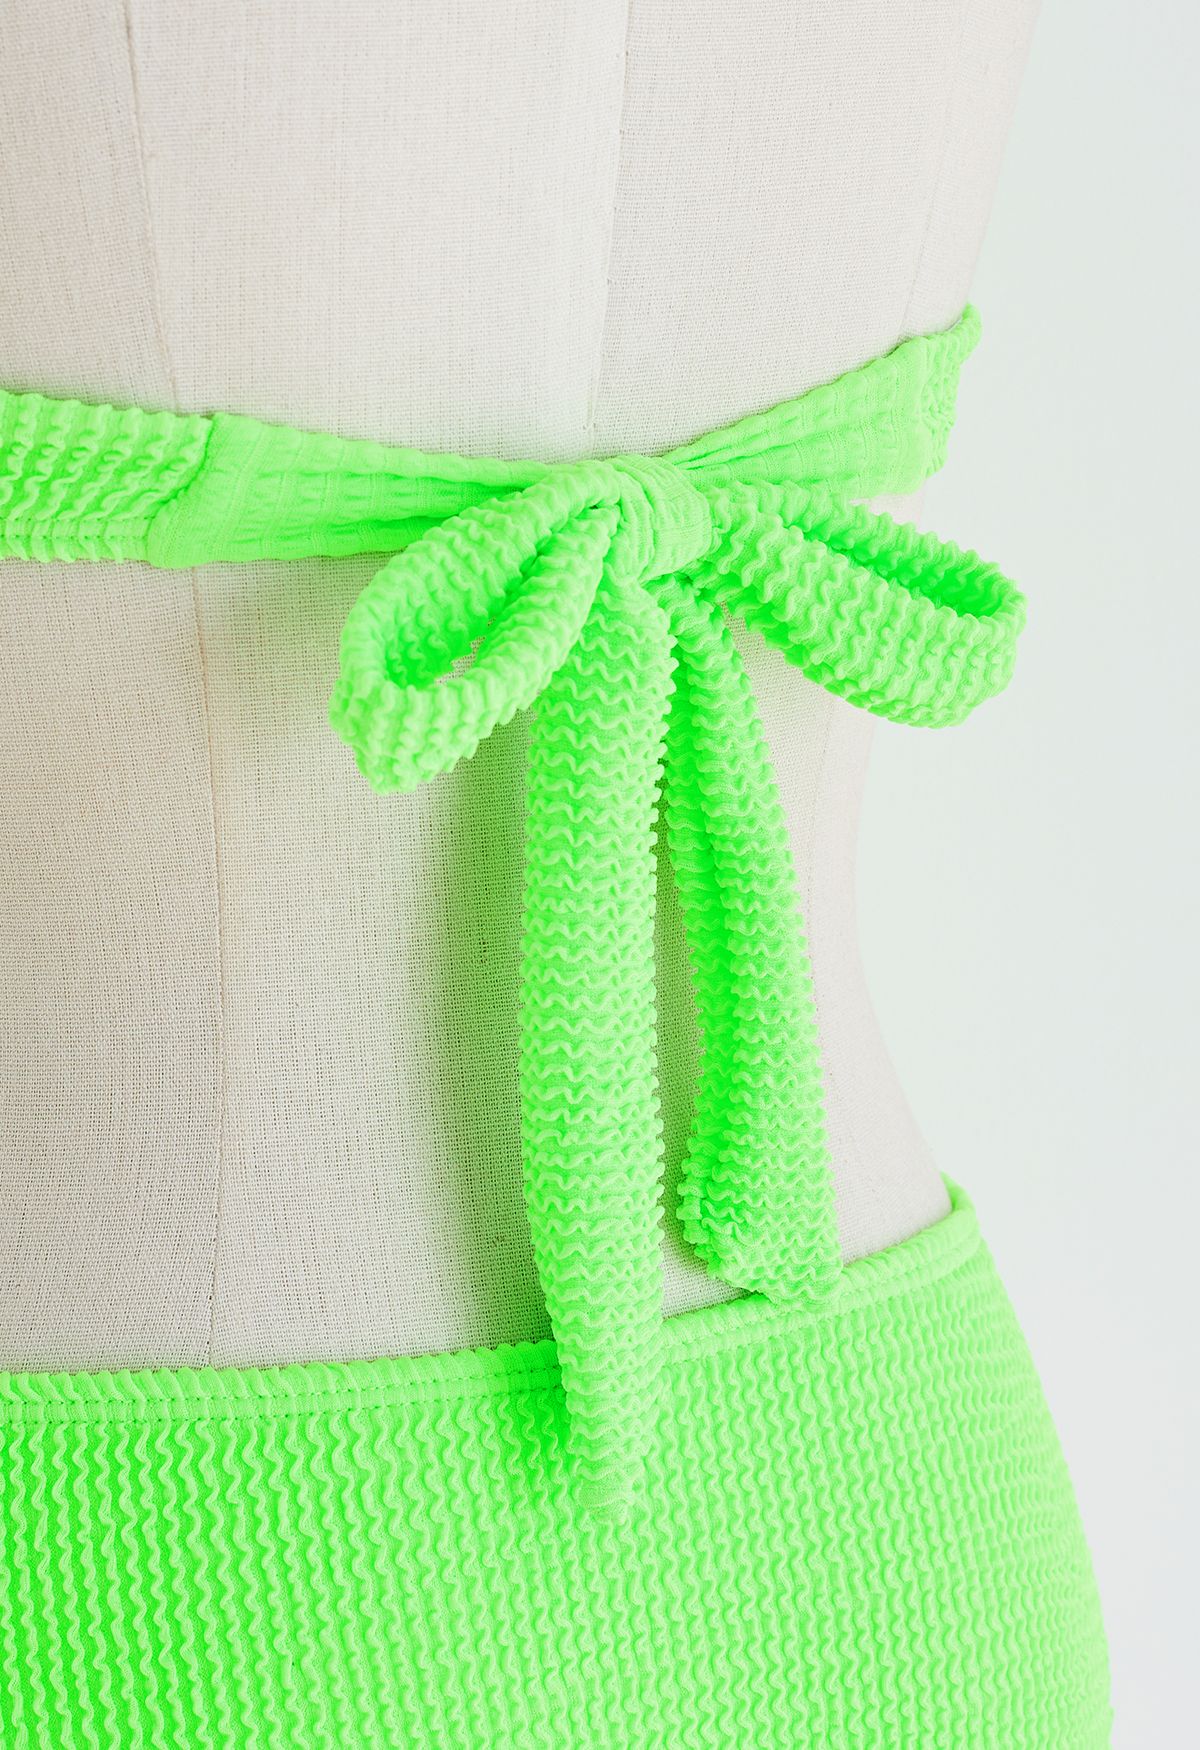 Conjunto de bikini de textura ondulada verde neón